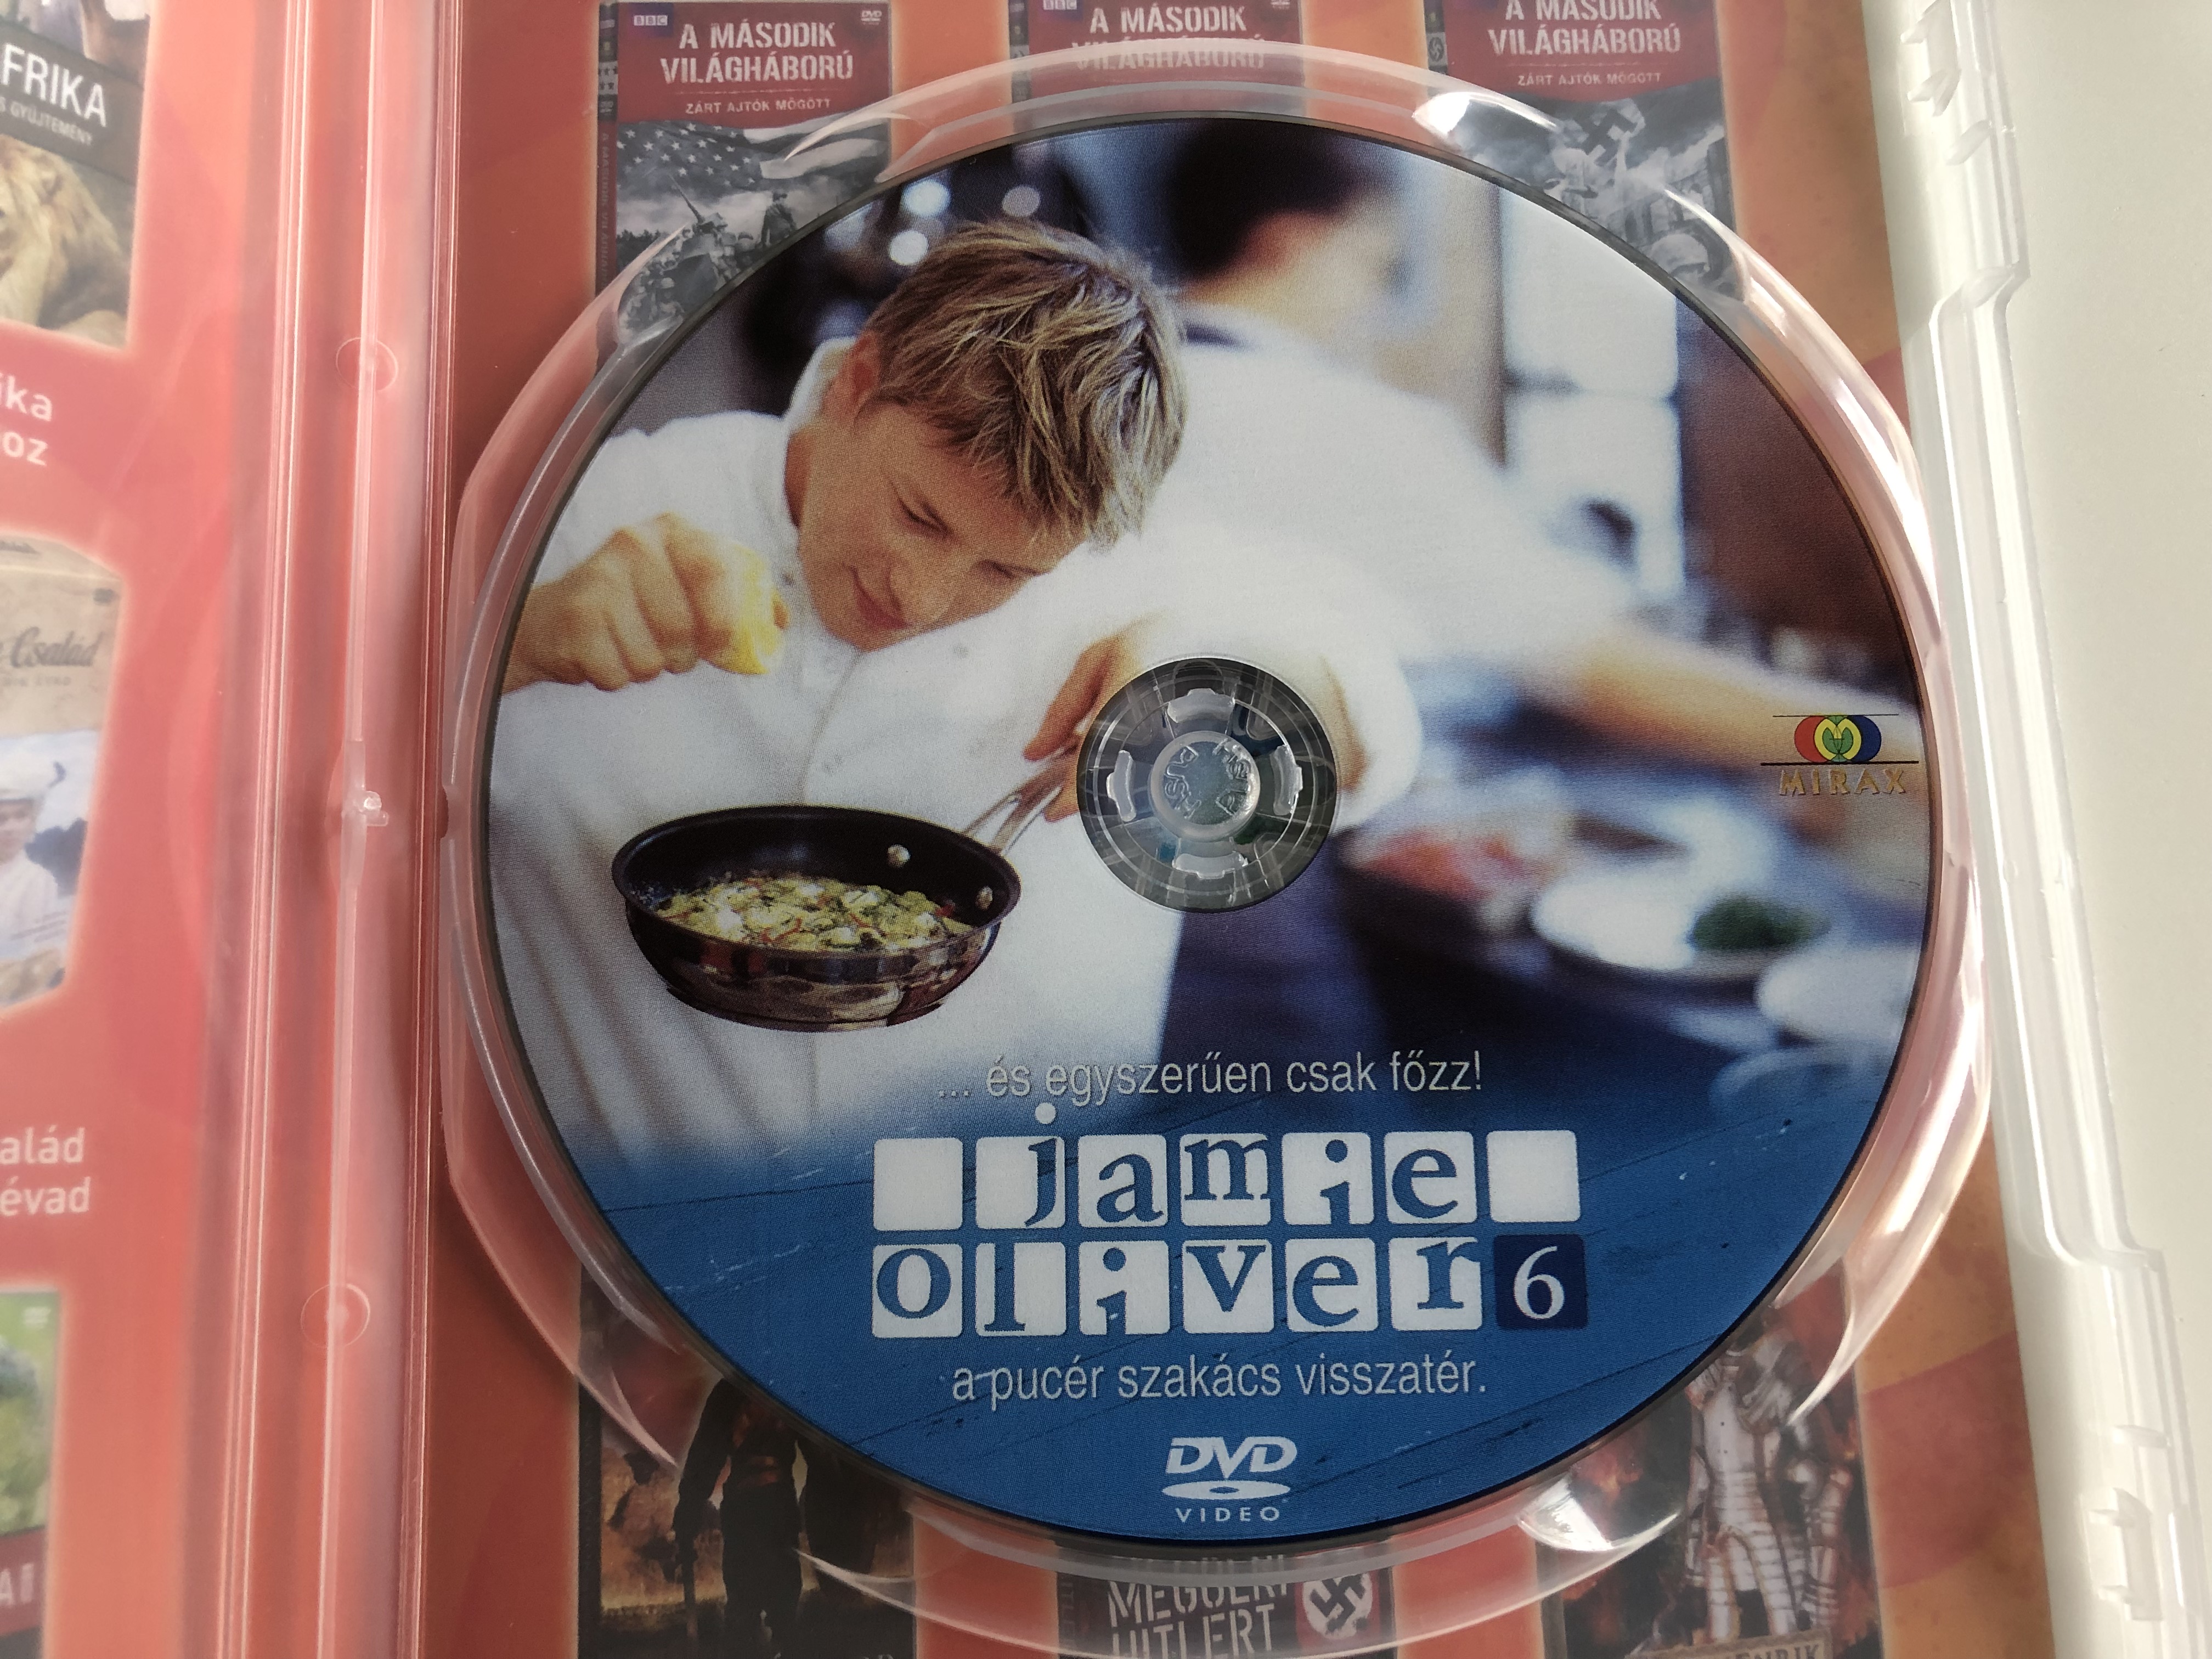 oliver-s-twist-dvd-2002-jamie-oliver-vol.-6-a-puc-r-szak-cs-visszat-r-2.jpg